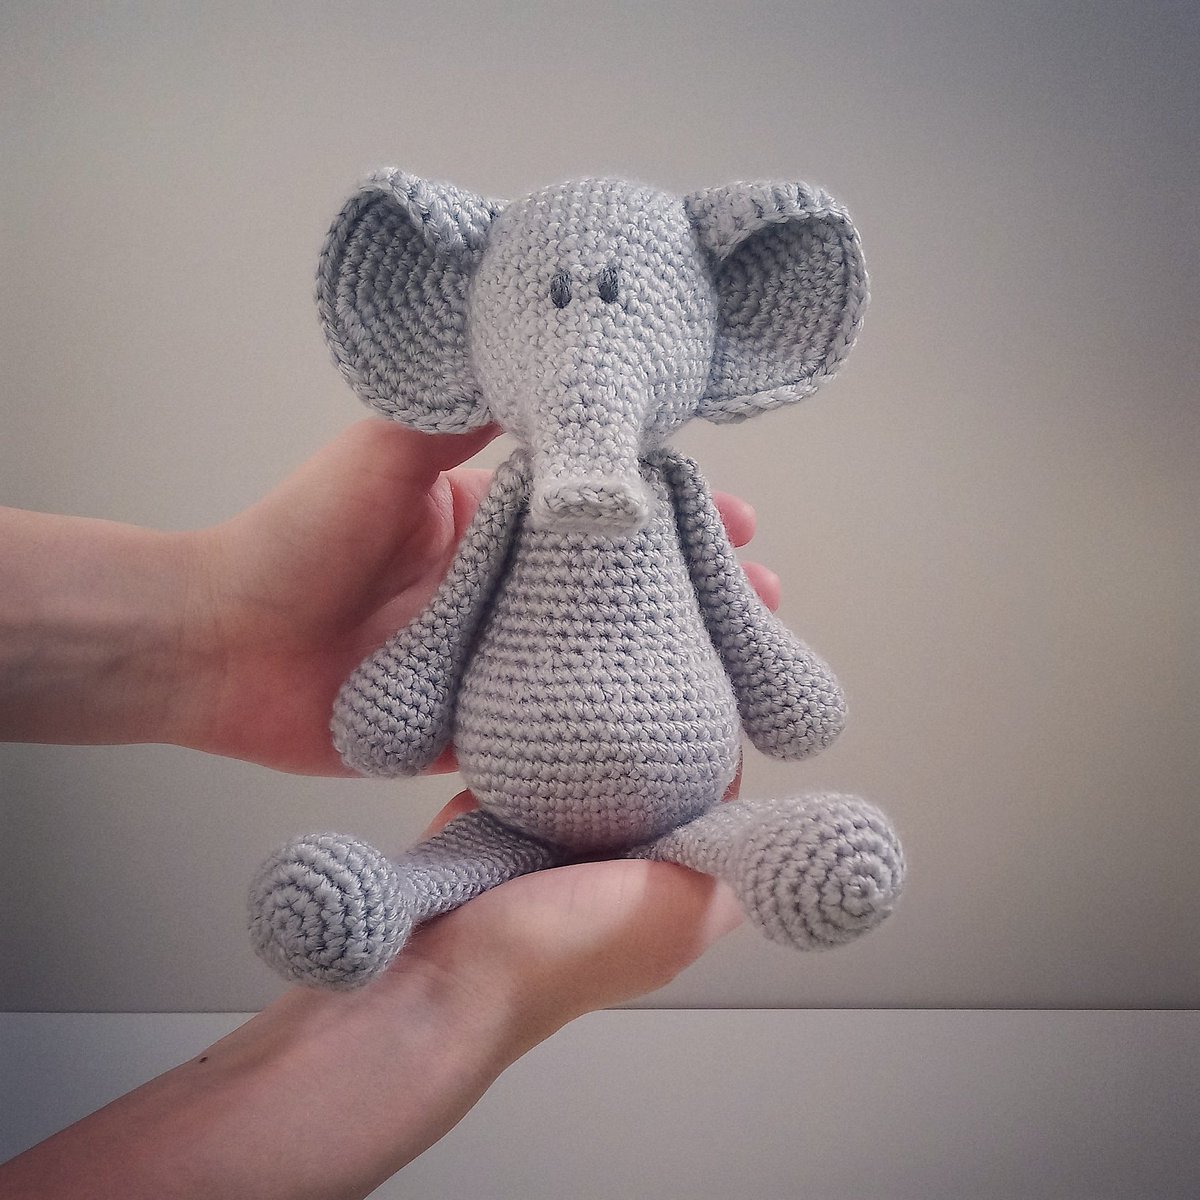 All 𝐛𝐢𝐠 things, start 𝘴𝘮𝘢𝘭𝘭 🐘

#crochet #handmadecrafts #crochetdesigner #foth #TuesdayThoughts #tuesdaymotivation #HandmadeHour #SmallBiz #uksmallbiz #shopsmall #elephant #babygift #christeninggift #giftidea